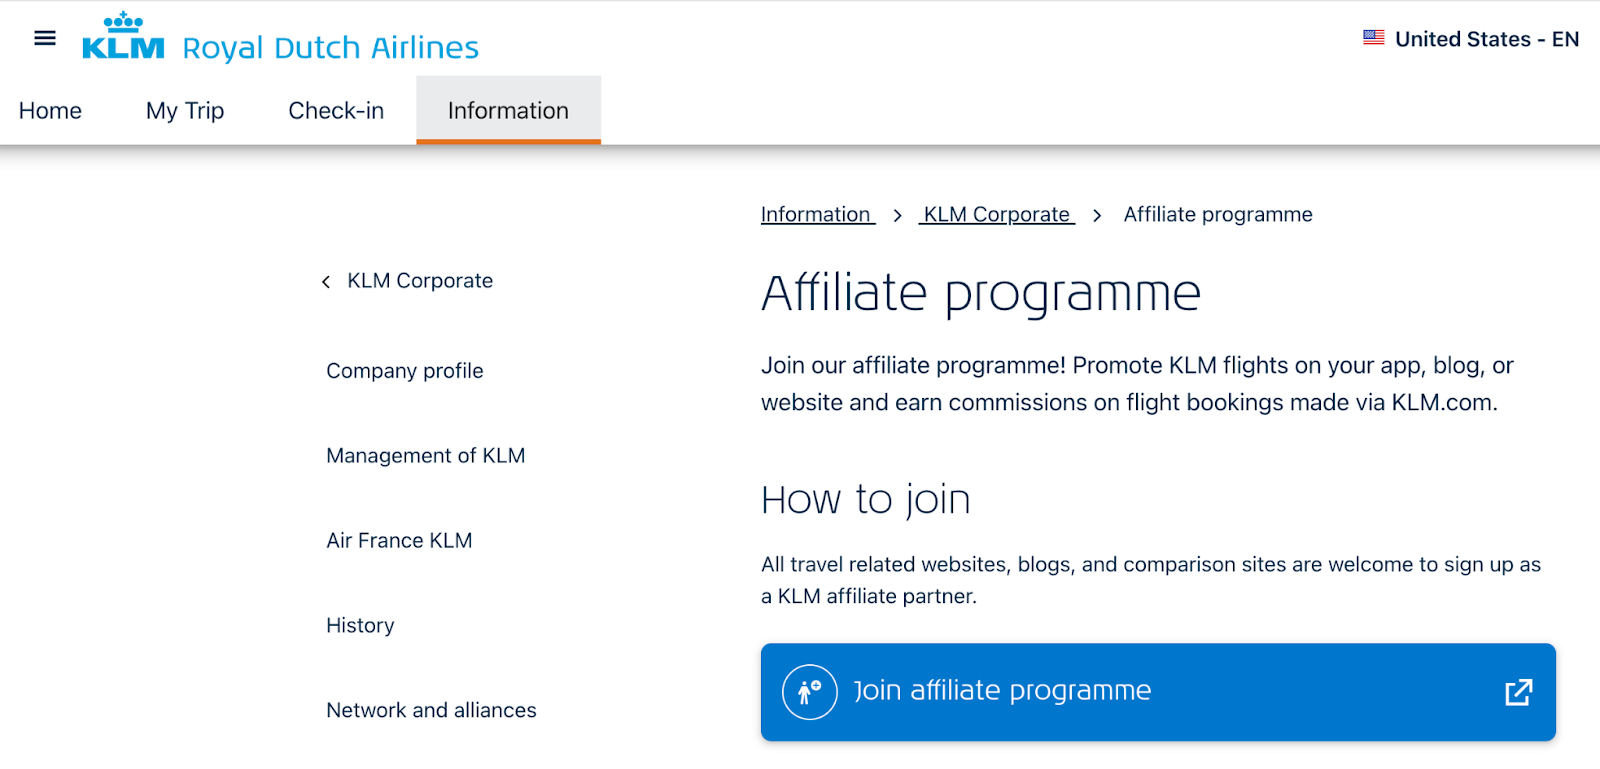 KLM Royal Dutch Airlines affiliate program page